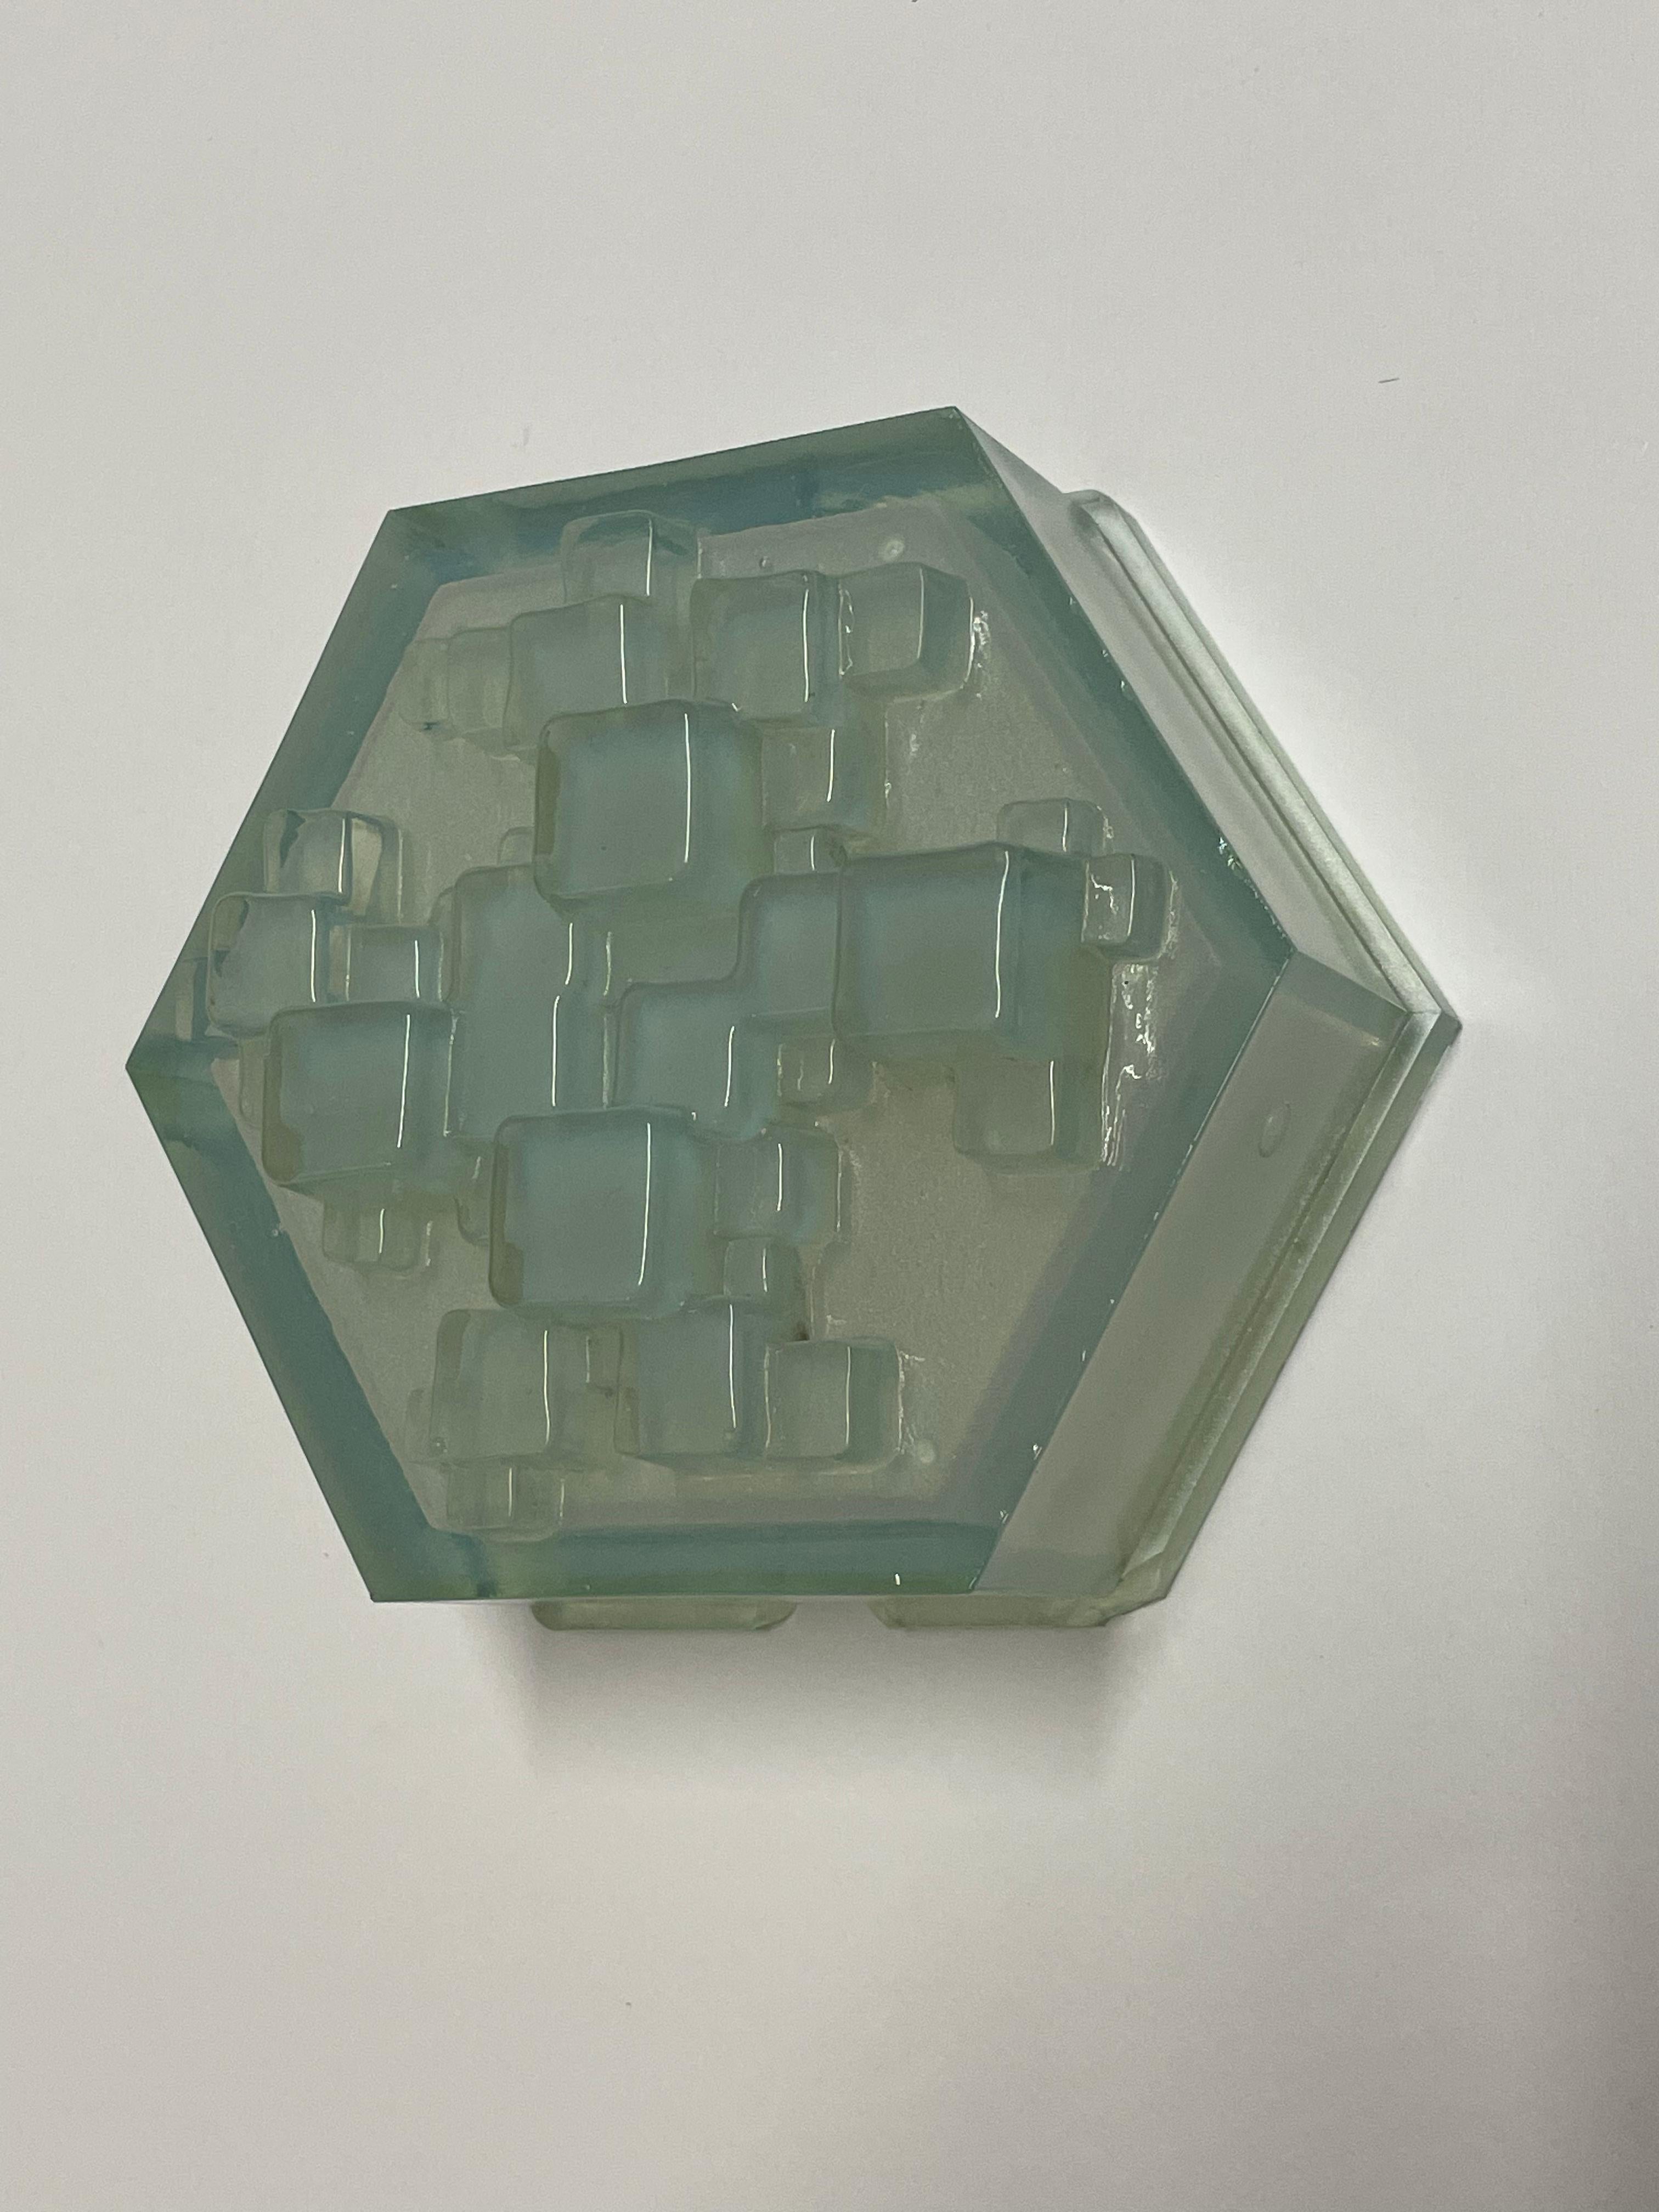 Hexagonal Modular Sconces / Flush Mounts by Poliarte - 4 available For Sale 9